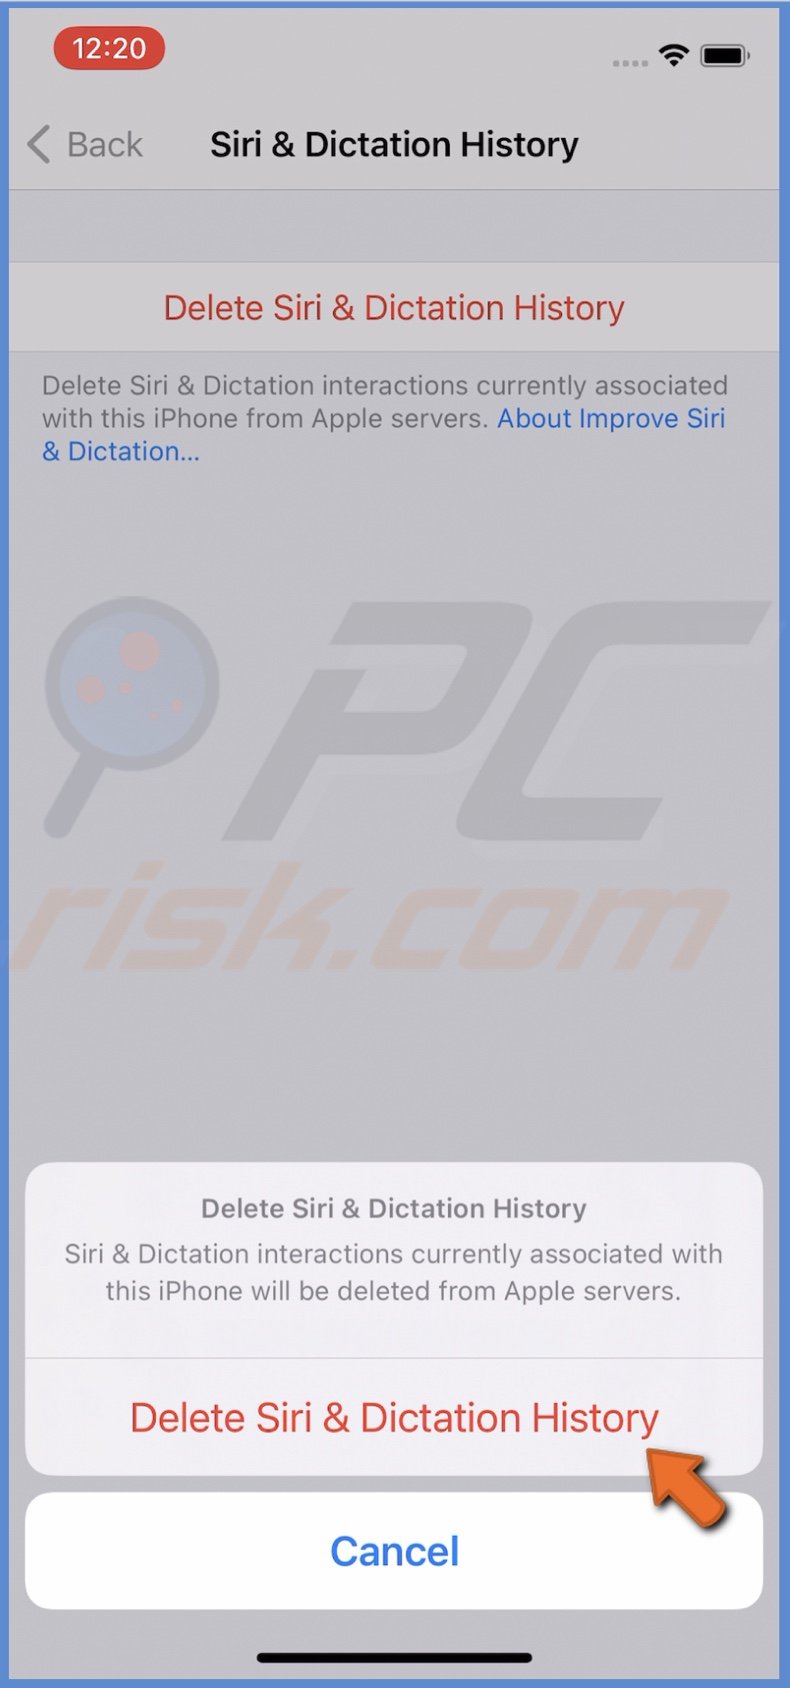 Tap on Delete Siri & Dictation History